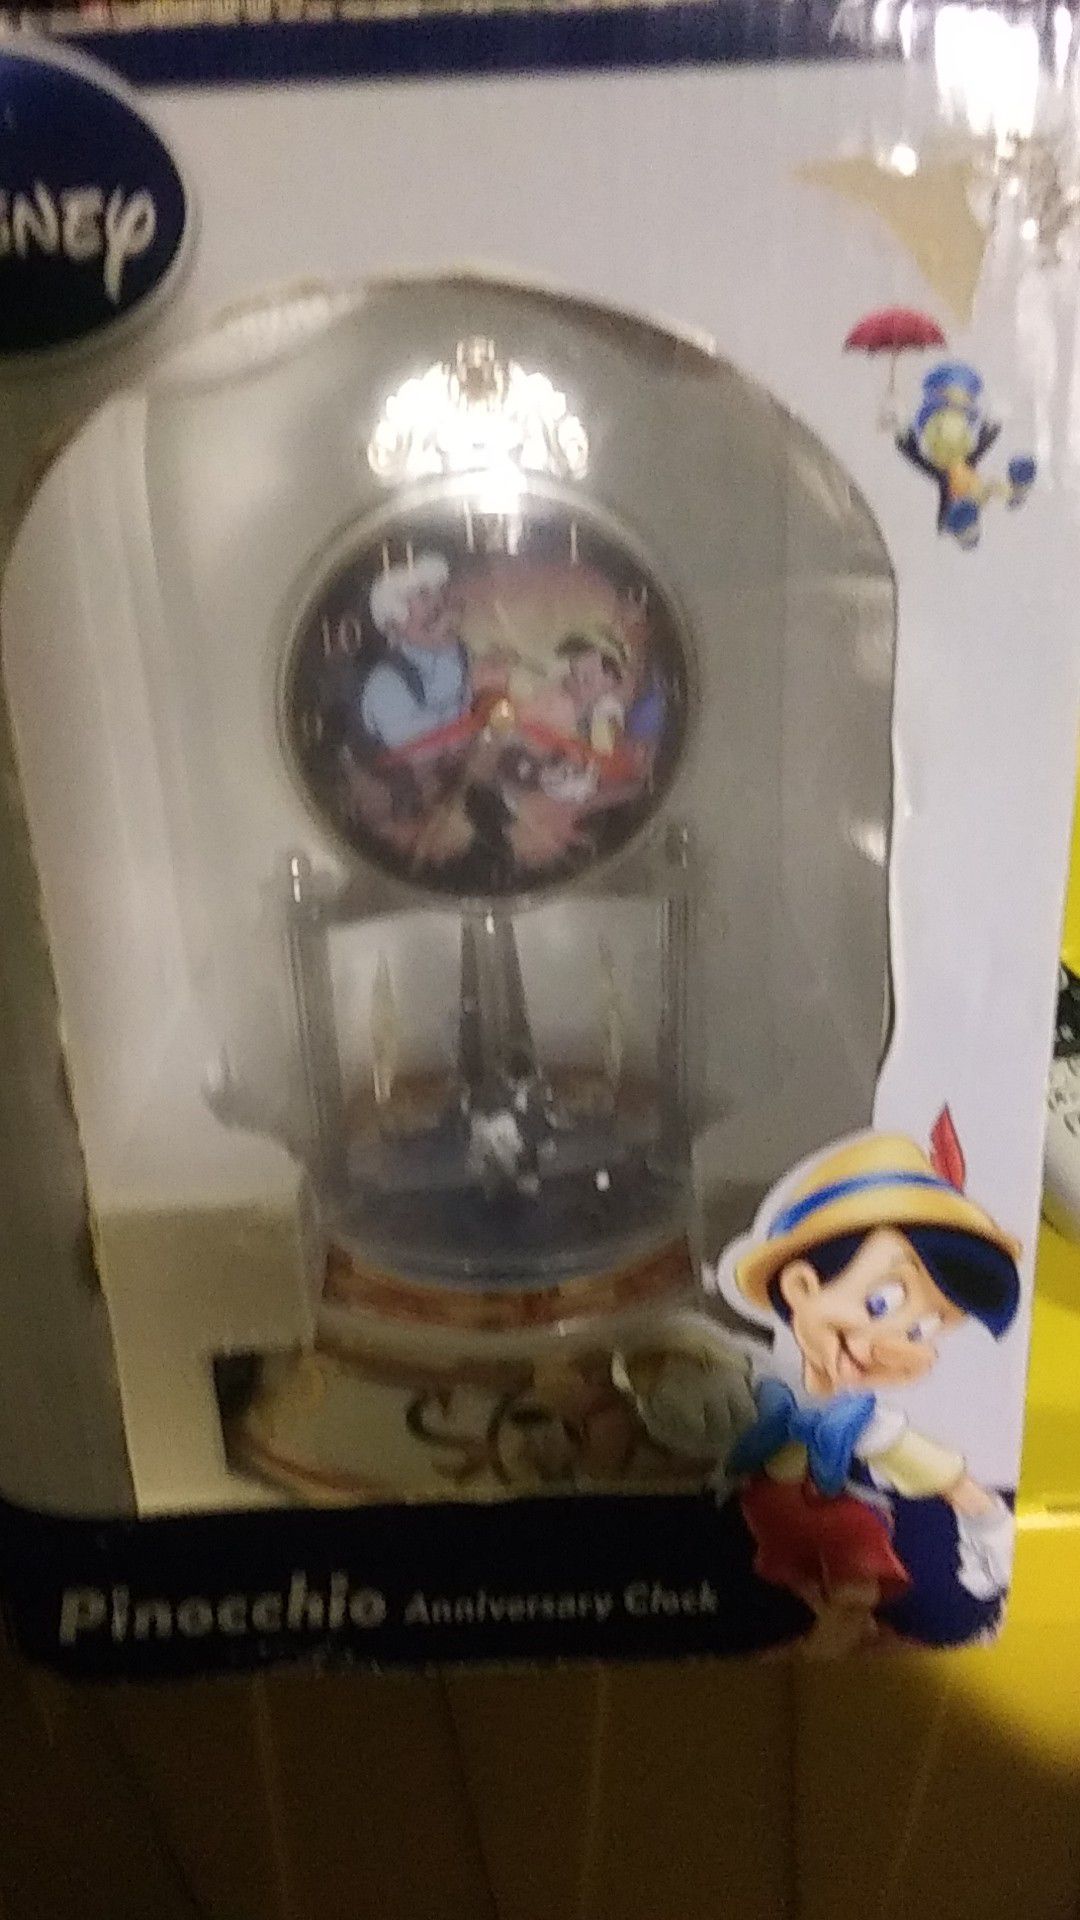 Disney Pinocchio Anniversary Clock